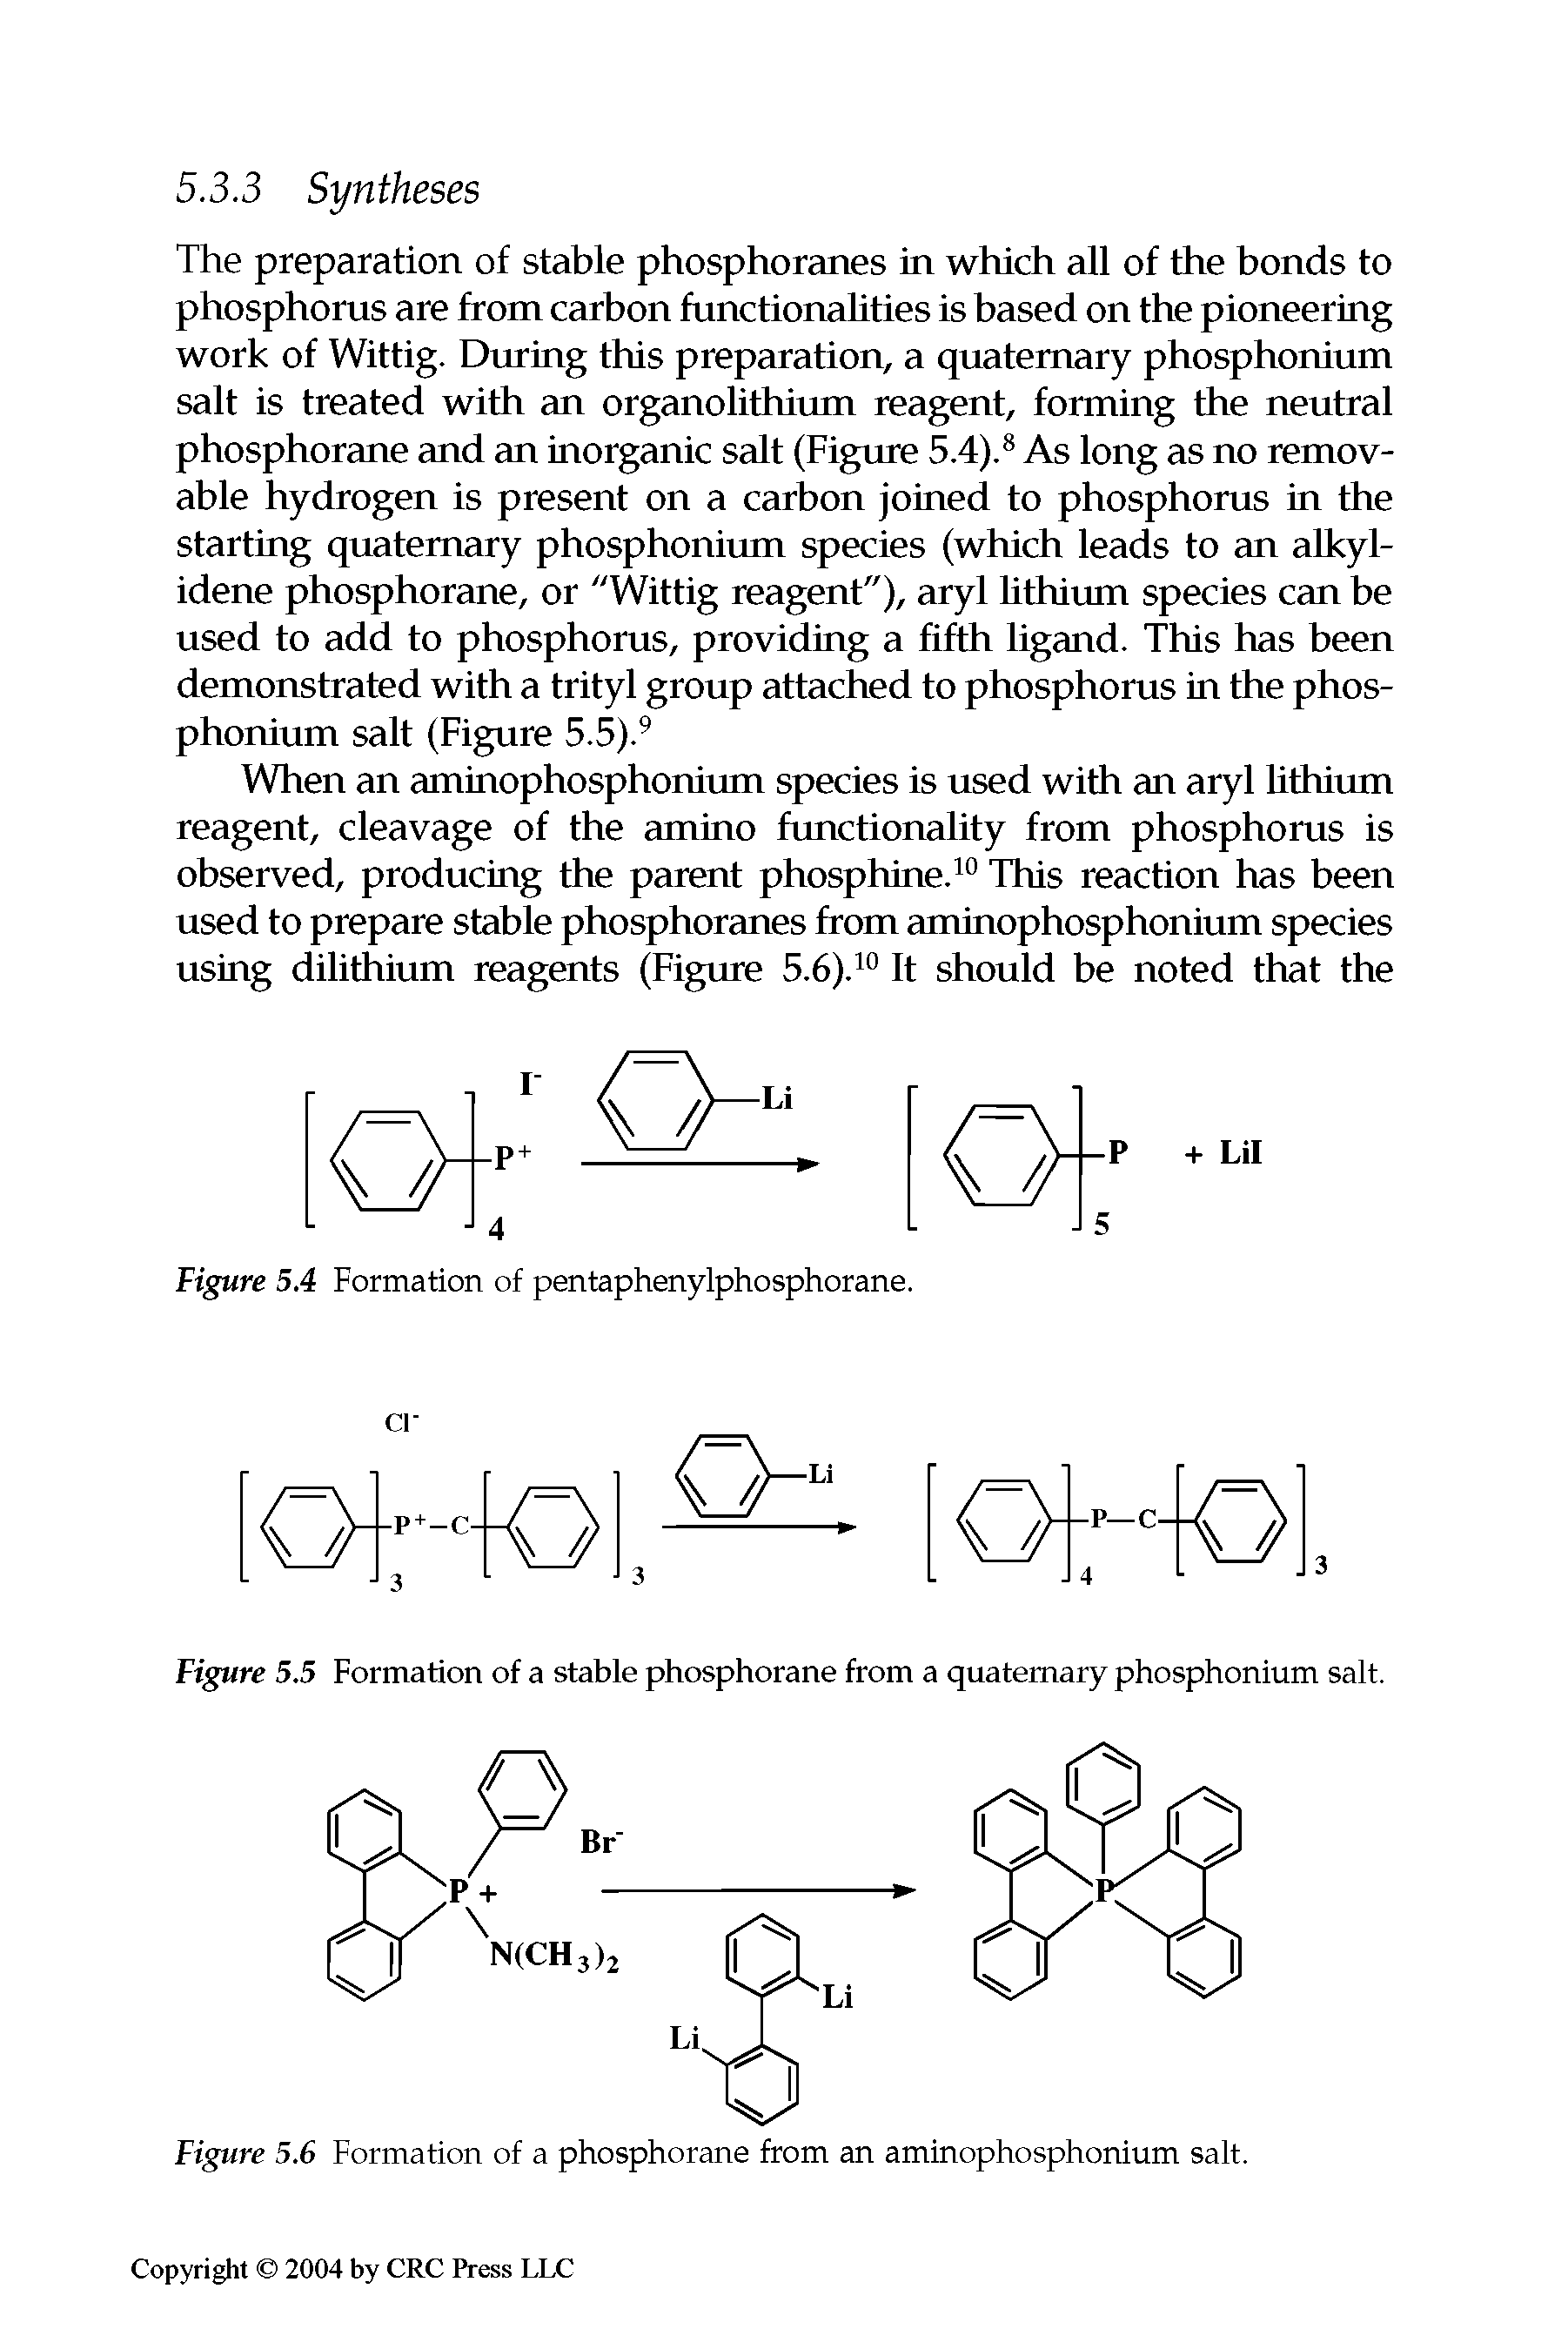 Figure 5.6 Formation of a phosphorane from an aminophosphonium salt.